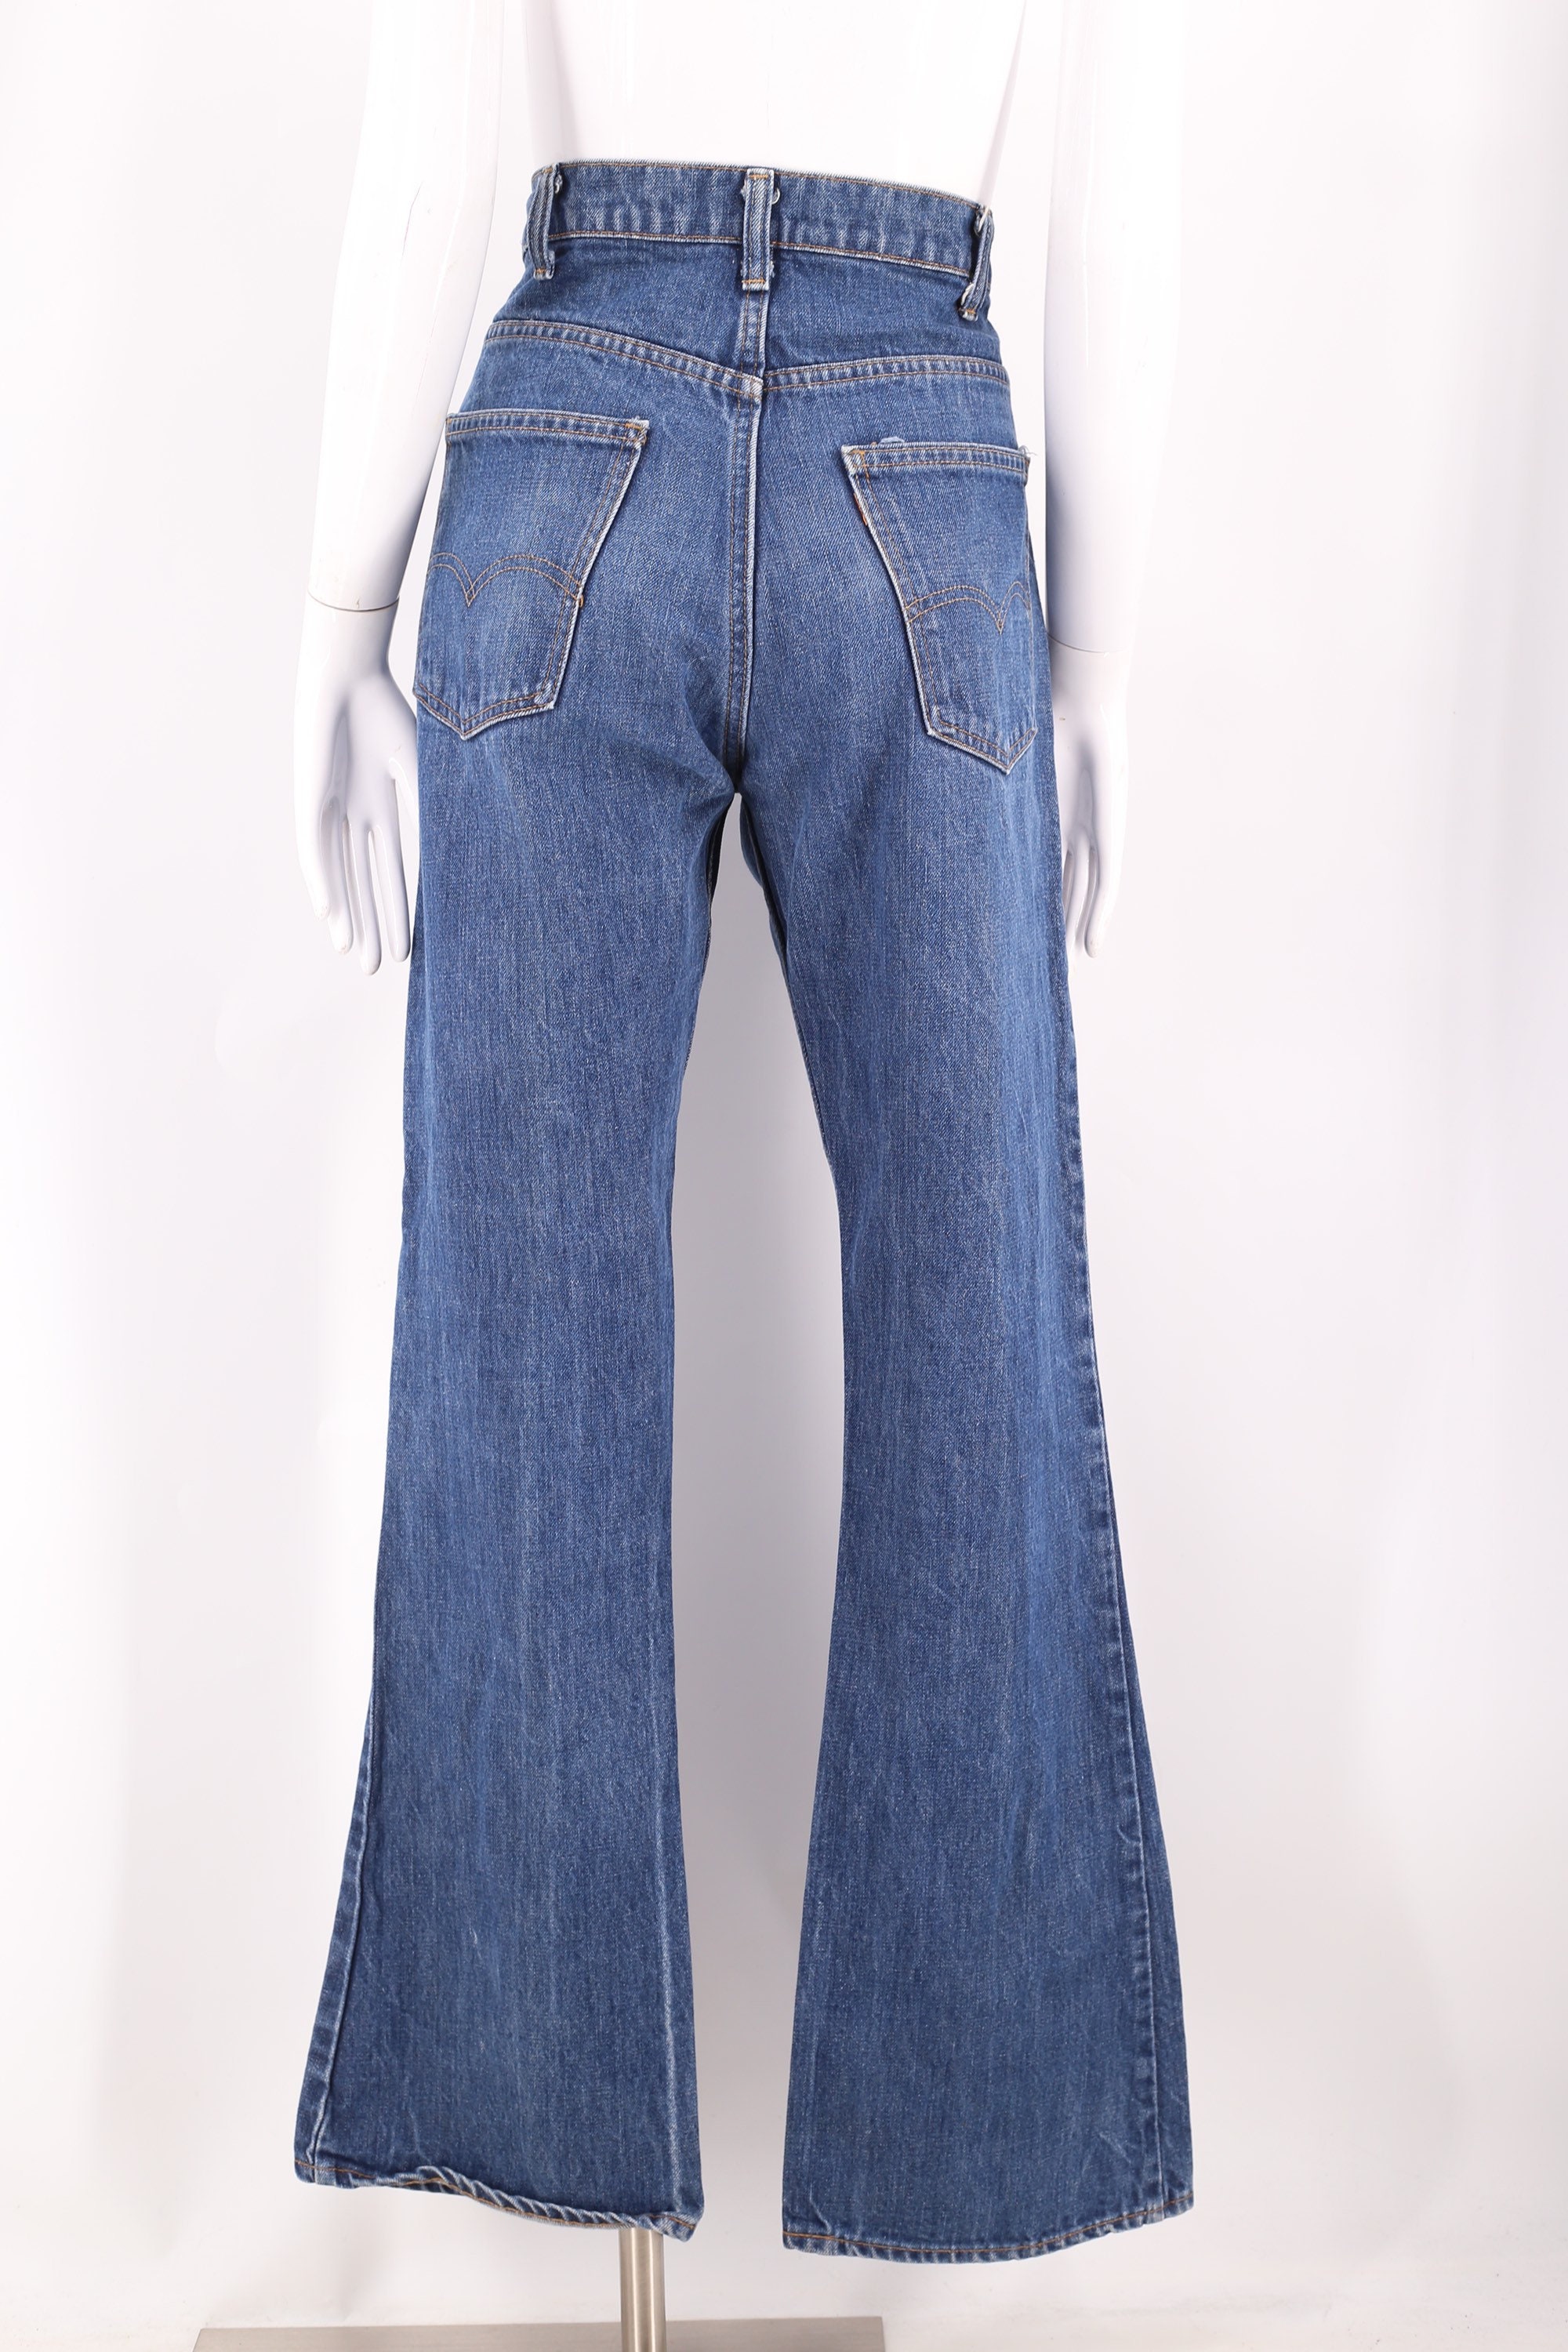 70s 80s LEVIS 517 high waist snap front bell bottom jeans 32 / vintage  1970s 1980s vintage Levis flares pants 32 x 32